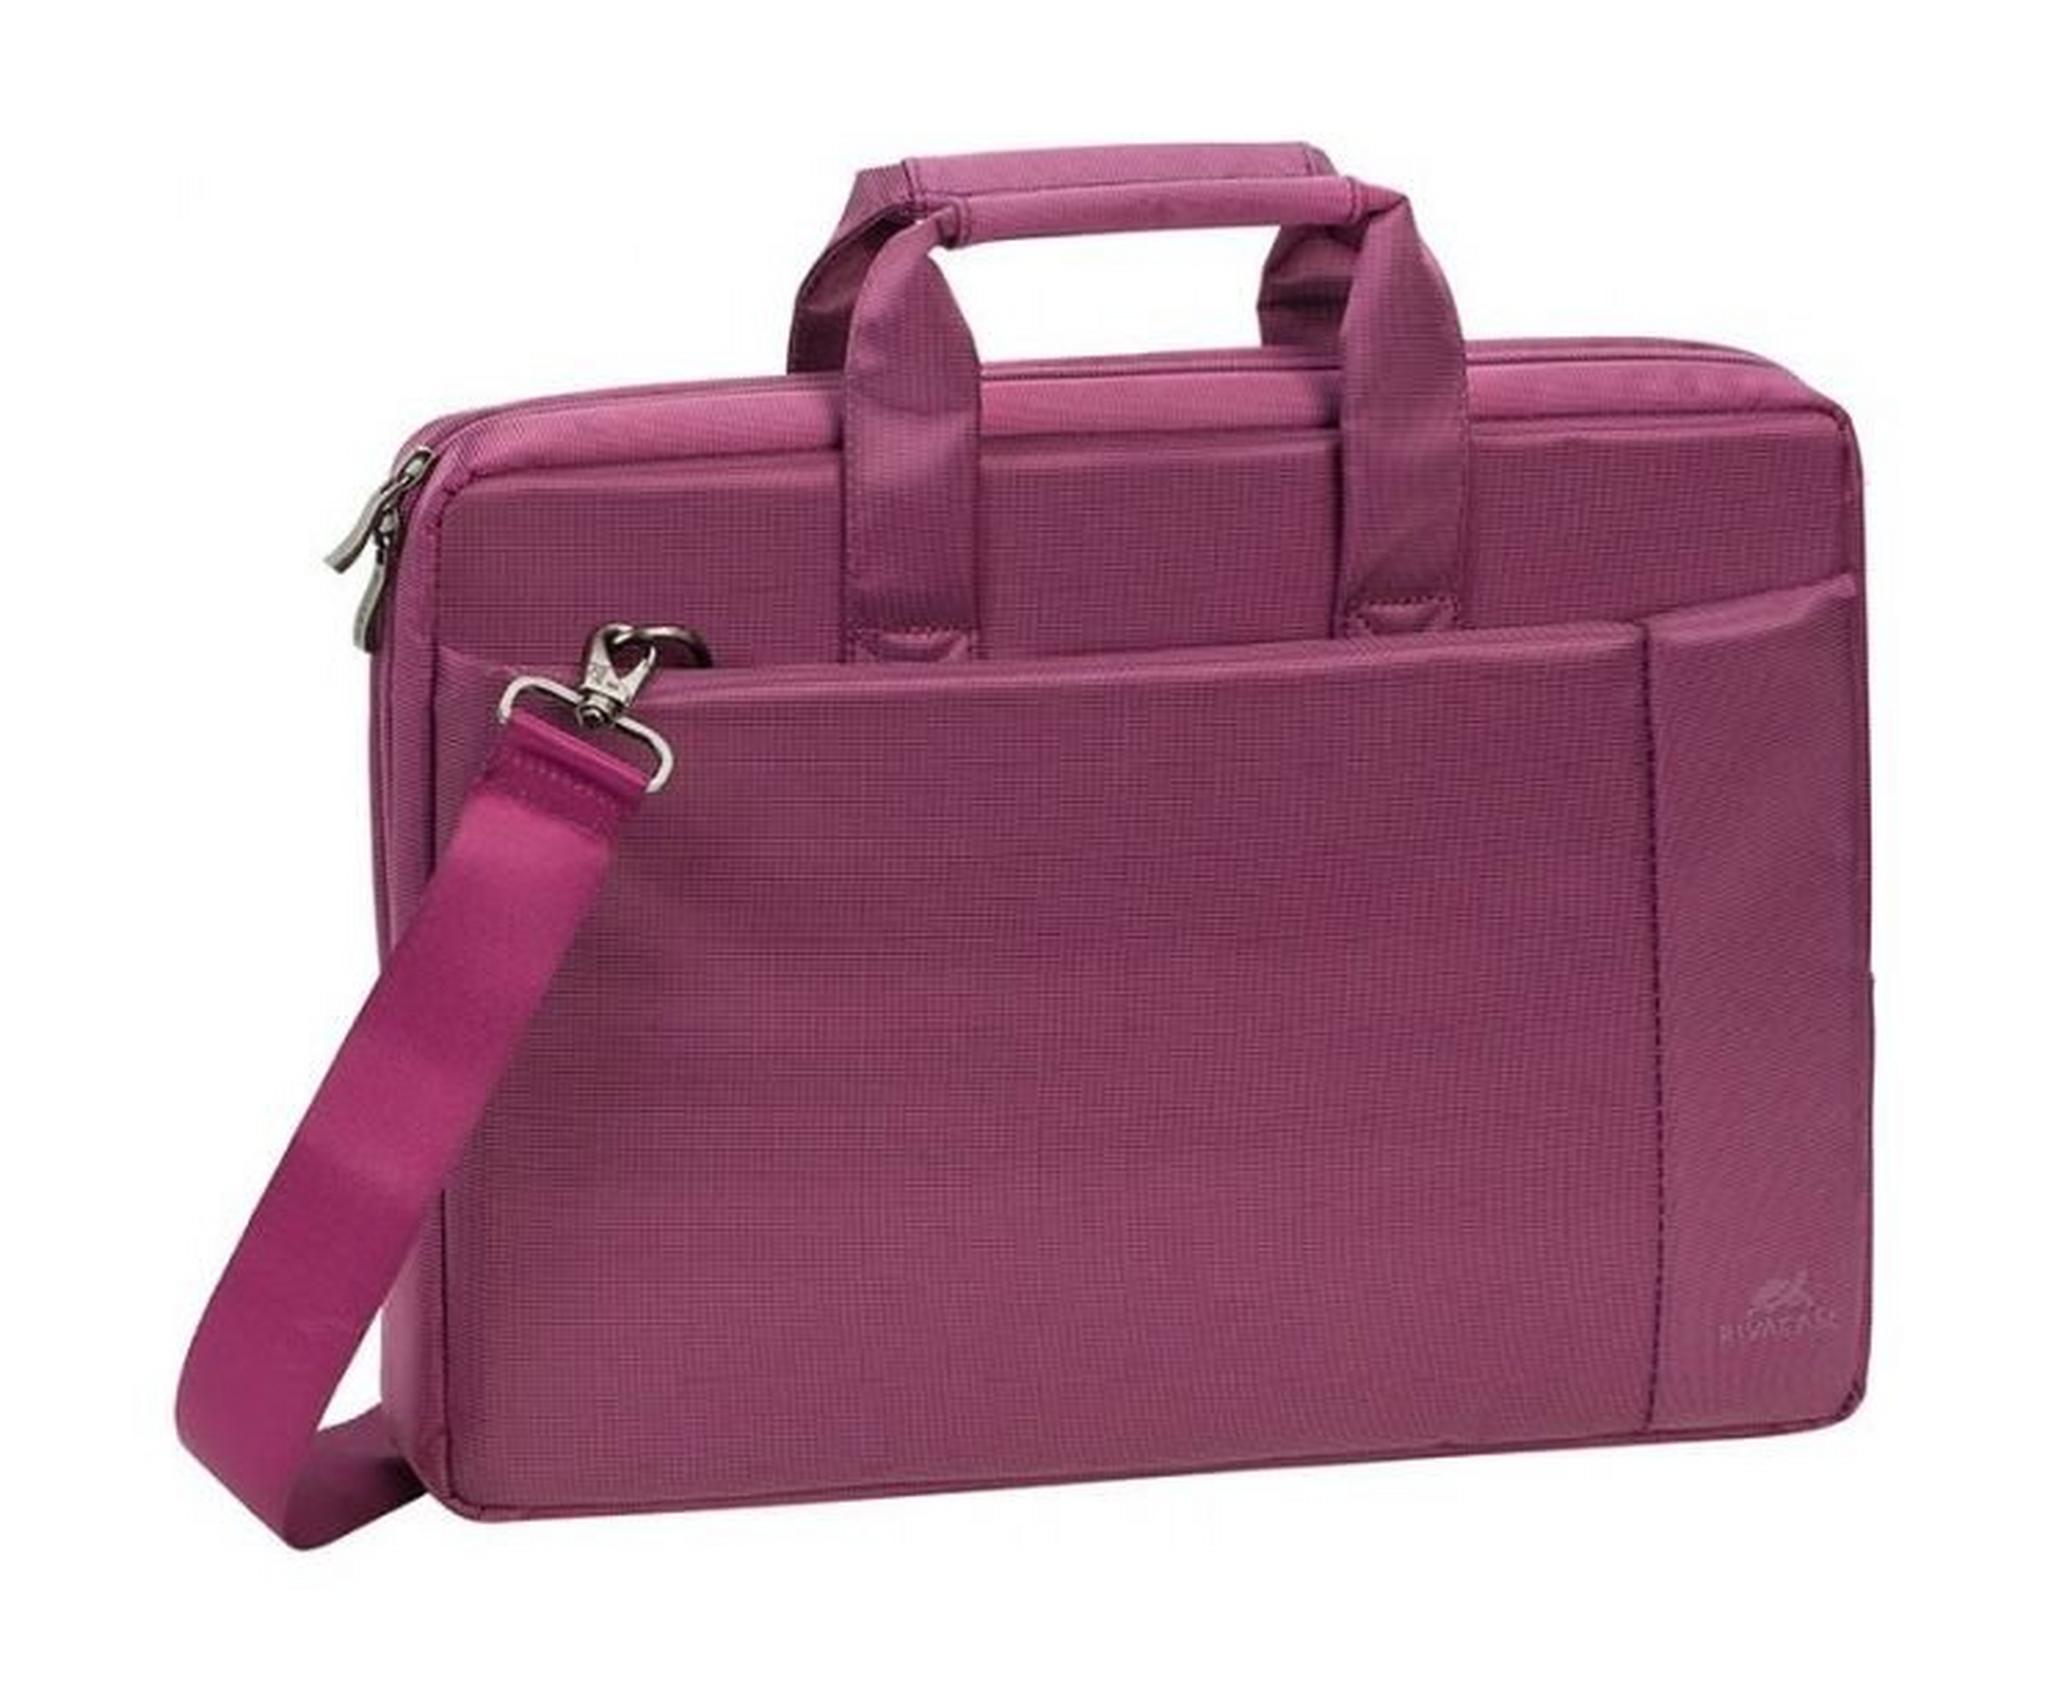 RivaCase 8231 Central 15.6-inch Laptop Bag - Purple